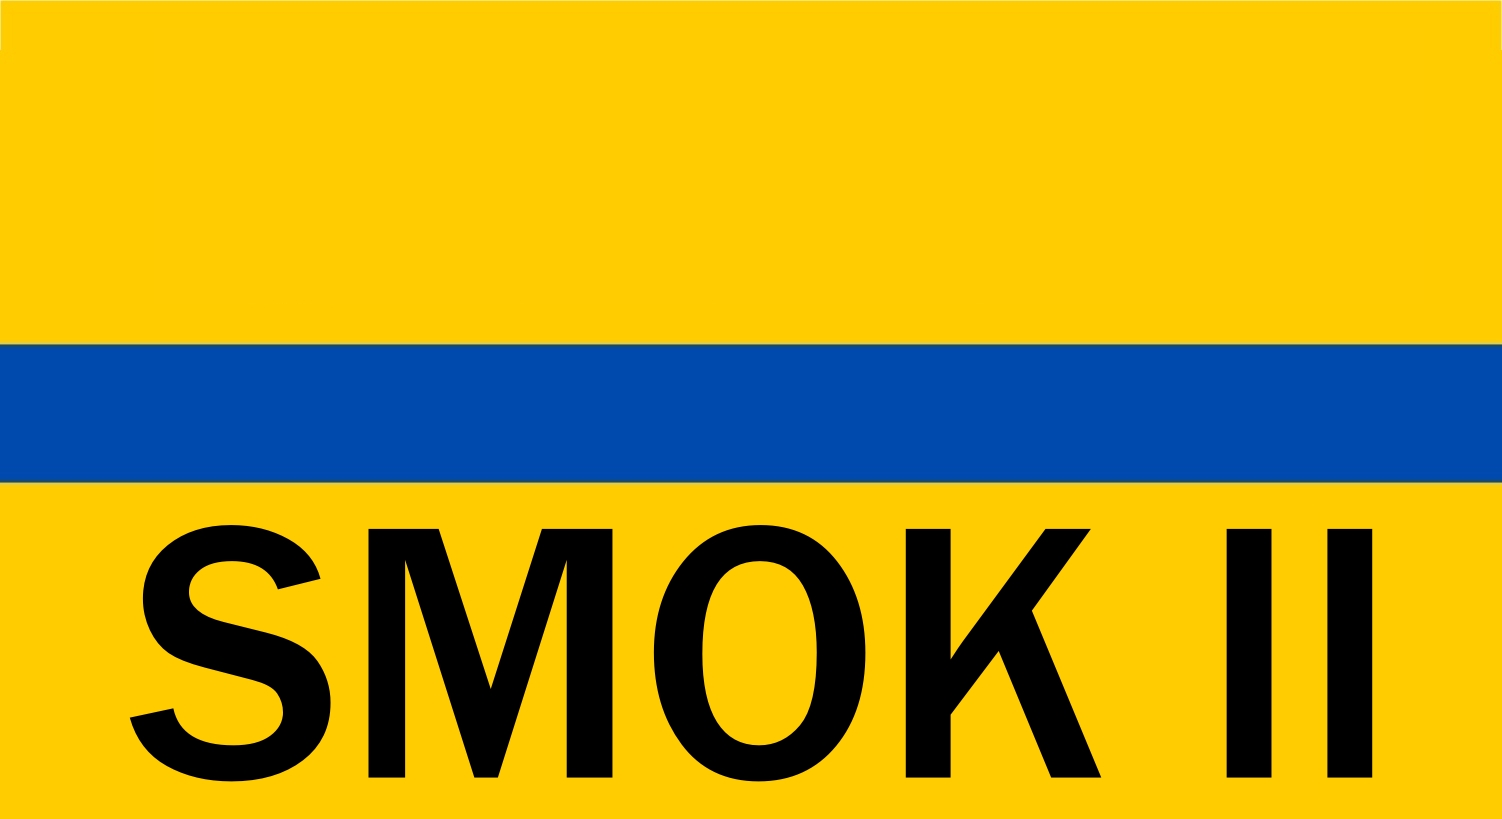 SMOK II